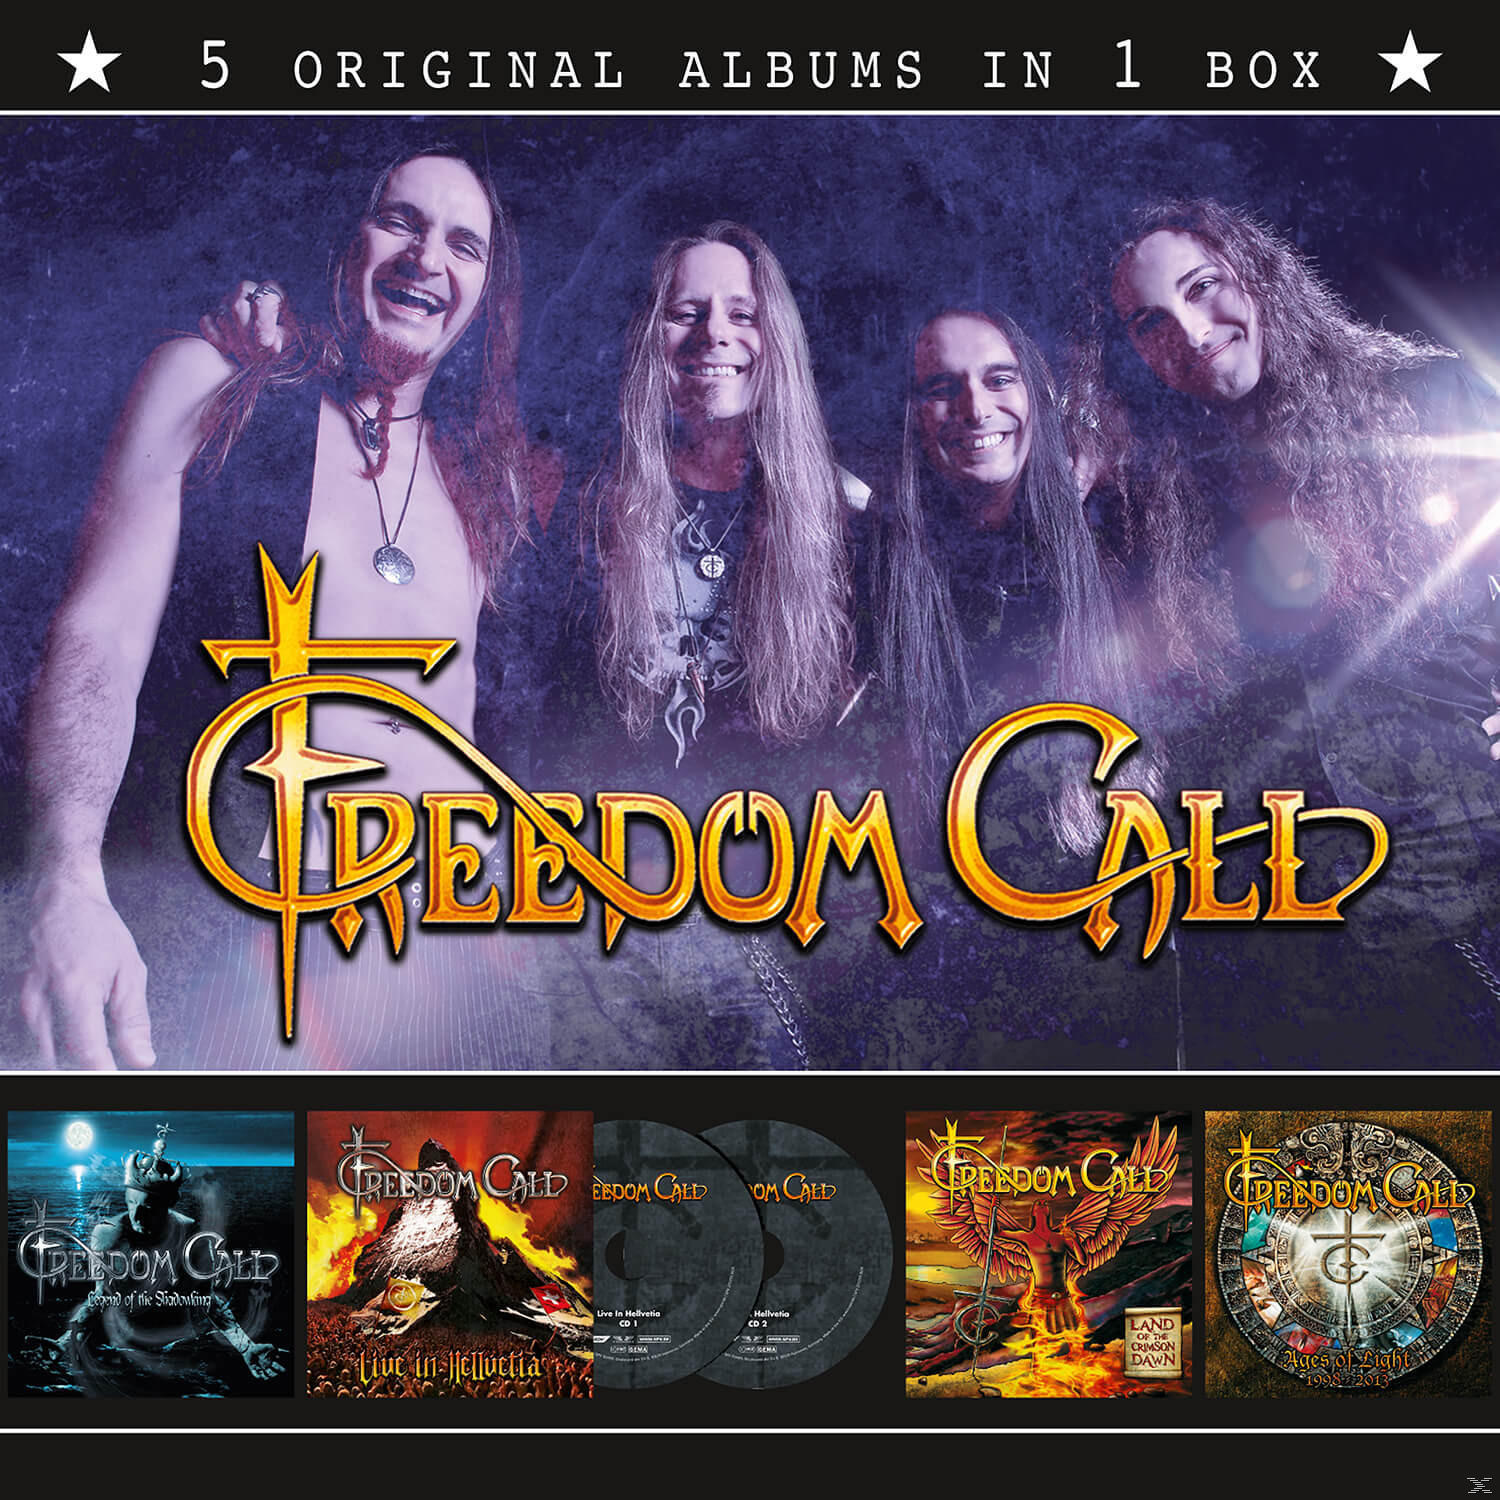 (CD) CALL Freedom - Albums Original 1 Box) In Call FREEDOM - (5